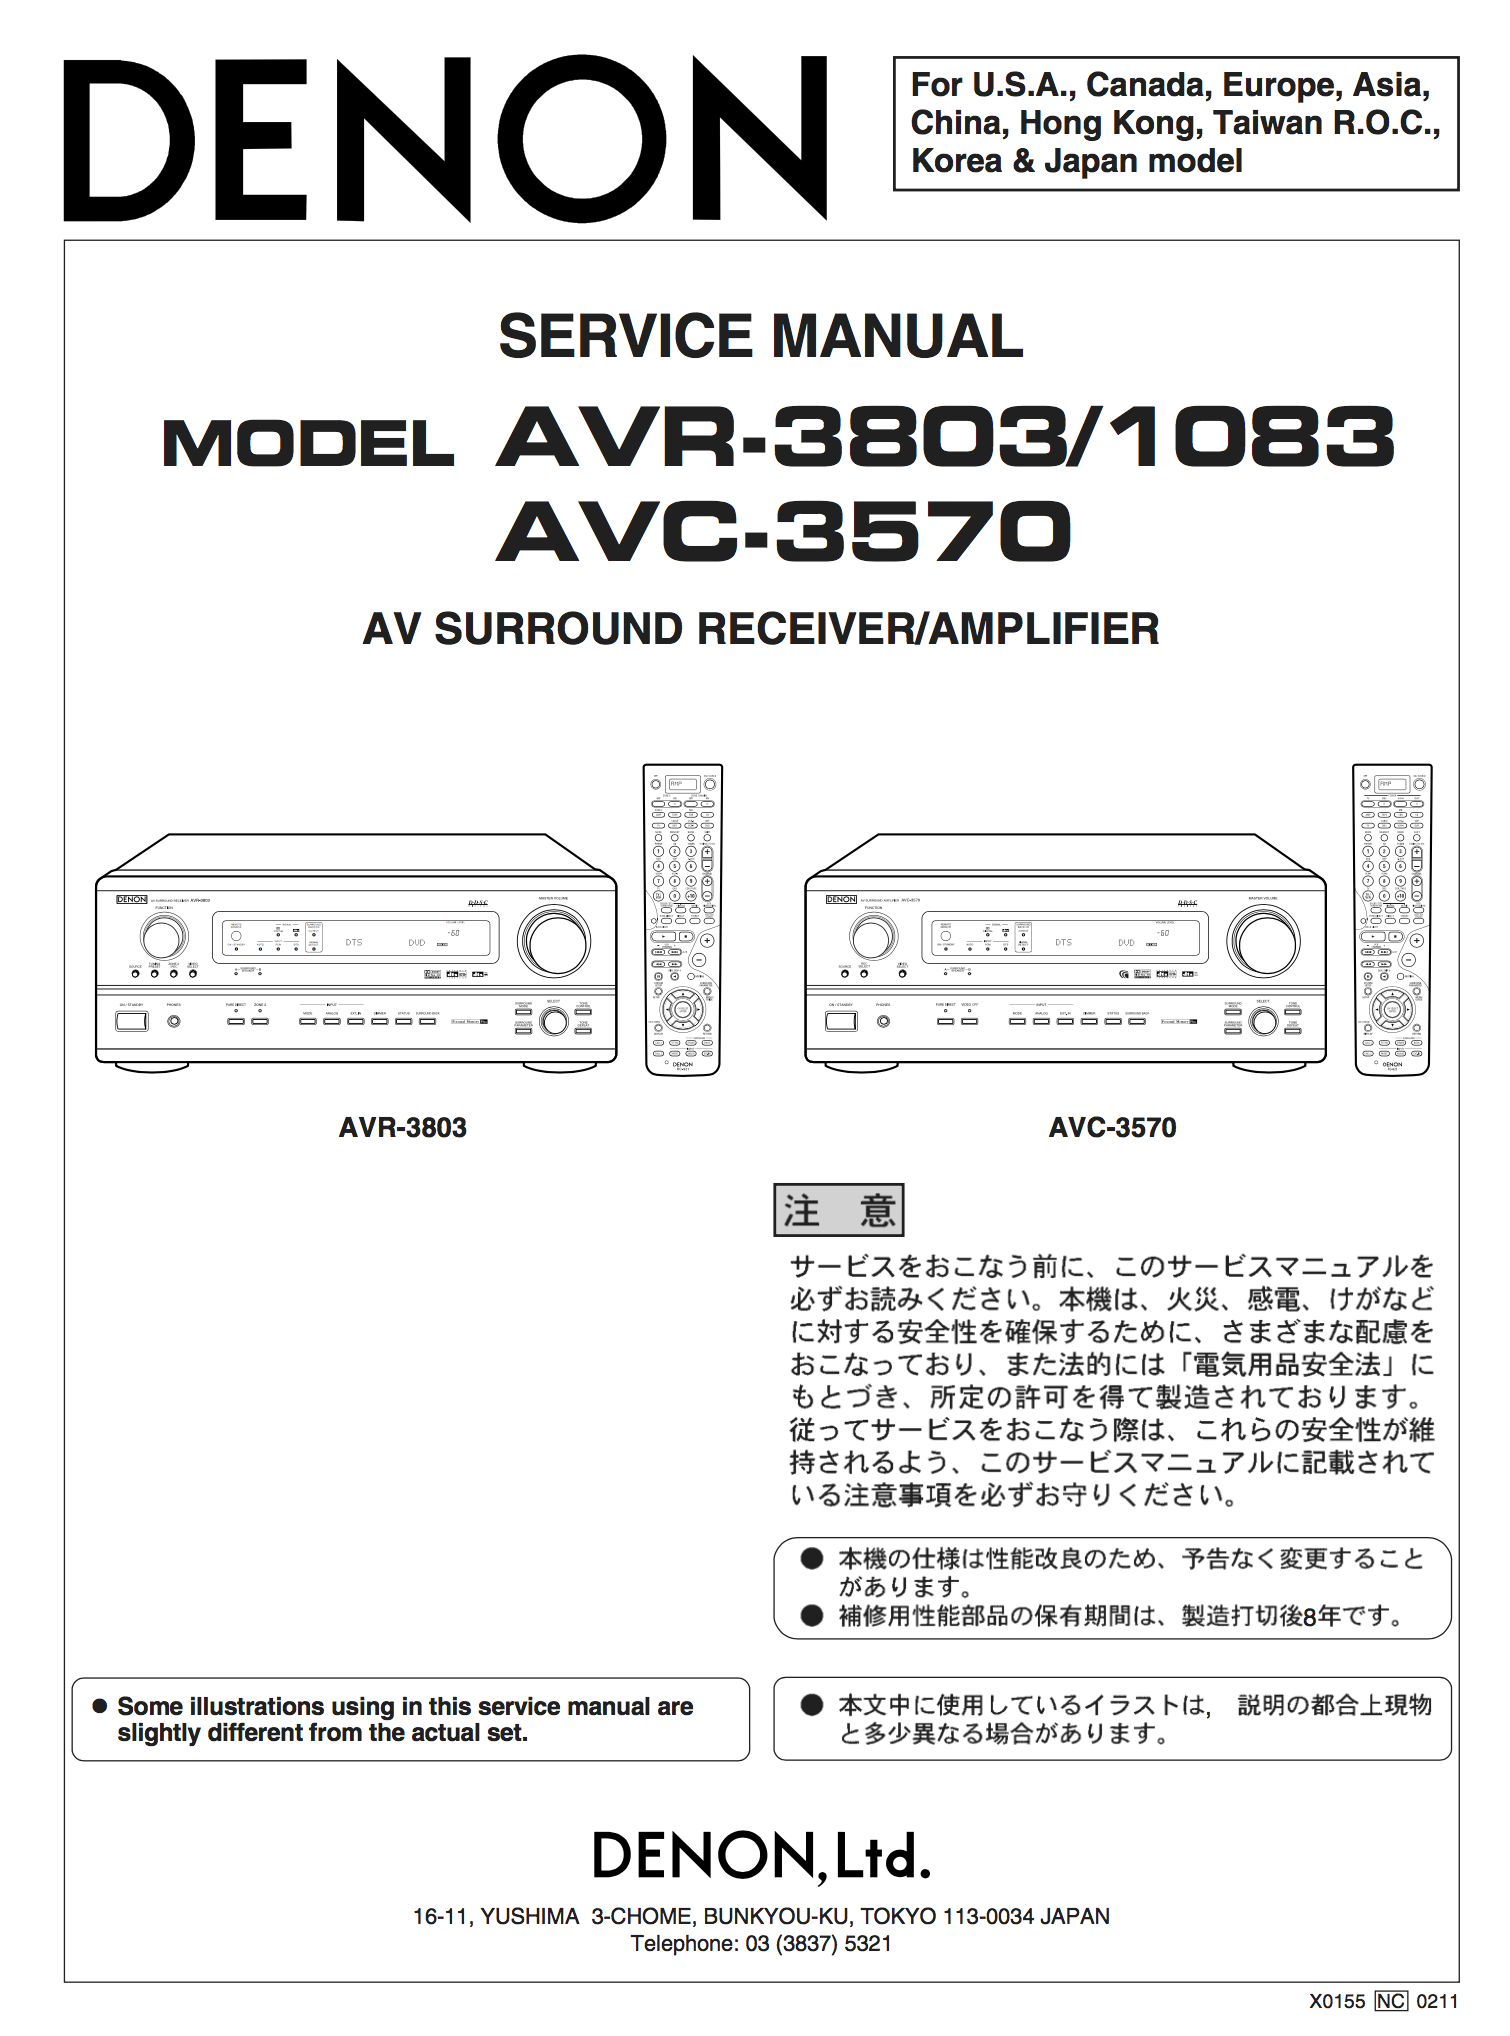 Denon AVR-1083 Service Manual - Spared Parts UK